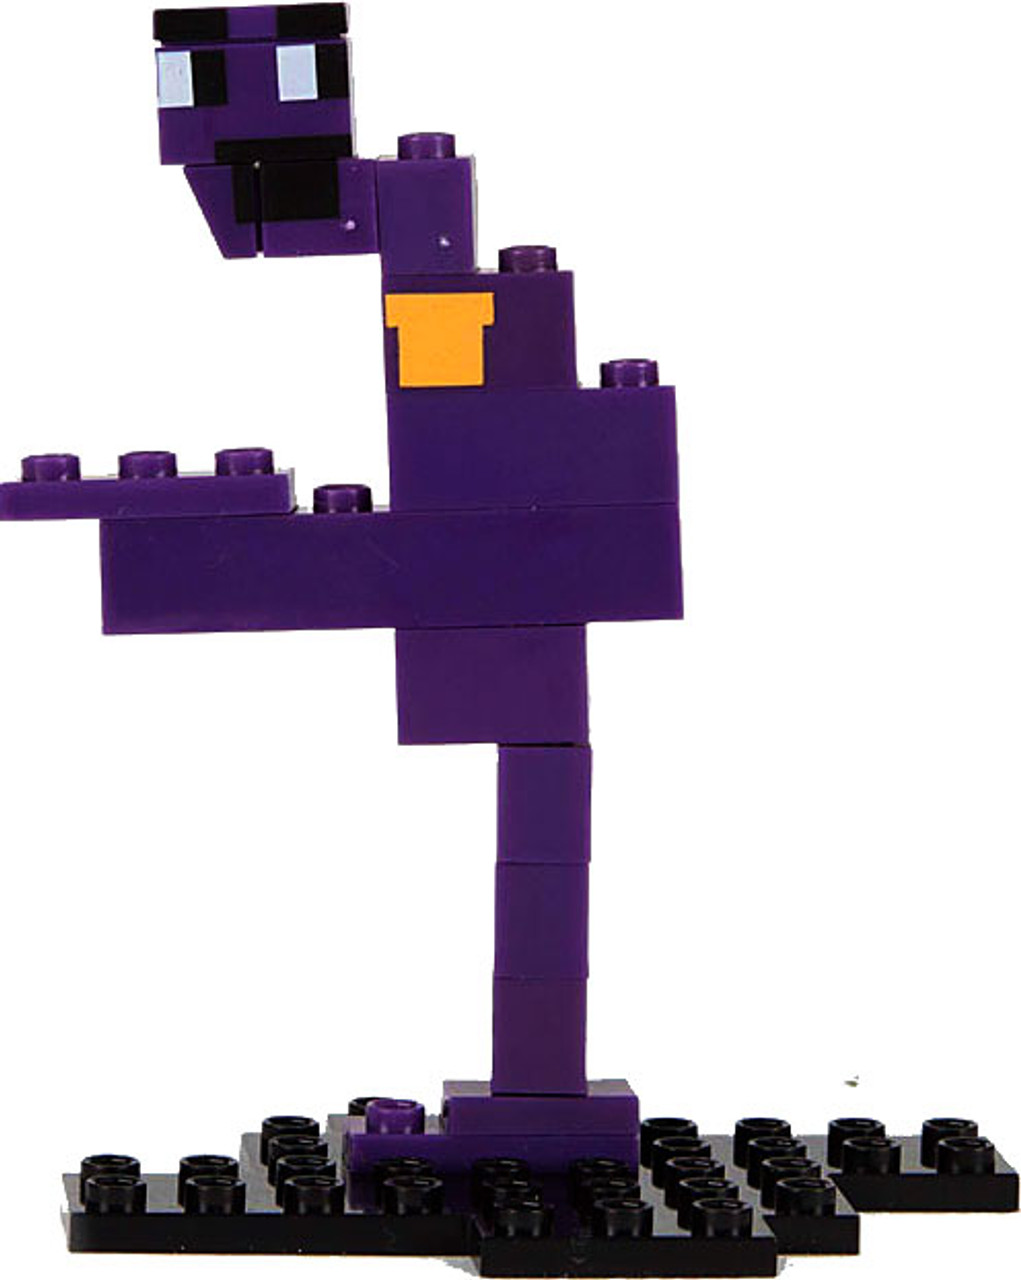 Mcfarlane Toys Five Nights At Freddys 8 Bit Series 1 Purple Guy Buildable Figure 12045 Golden Freddy Piece Toywiz - roblox animatronic world purple guy death